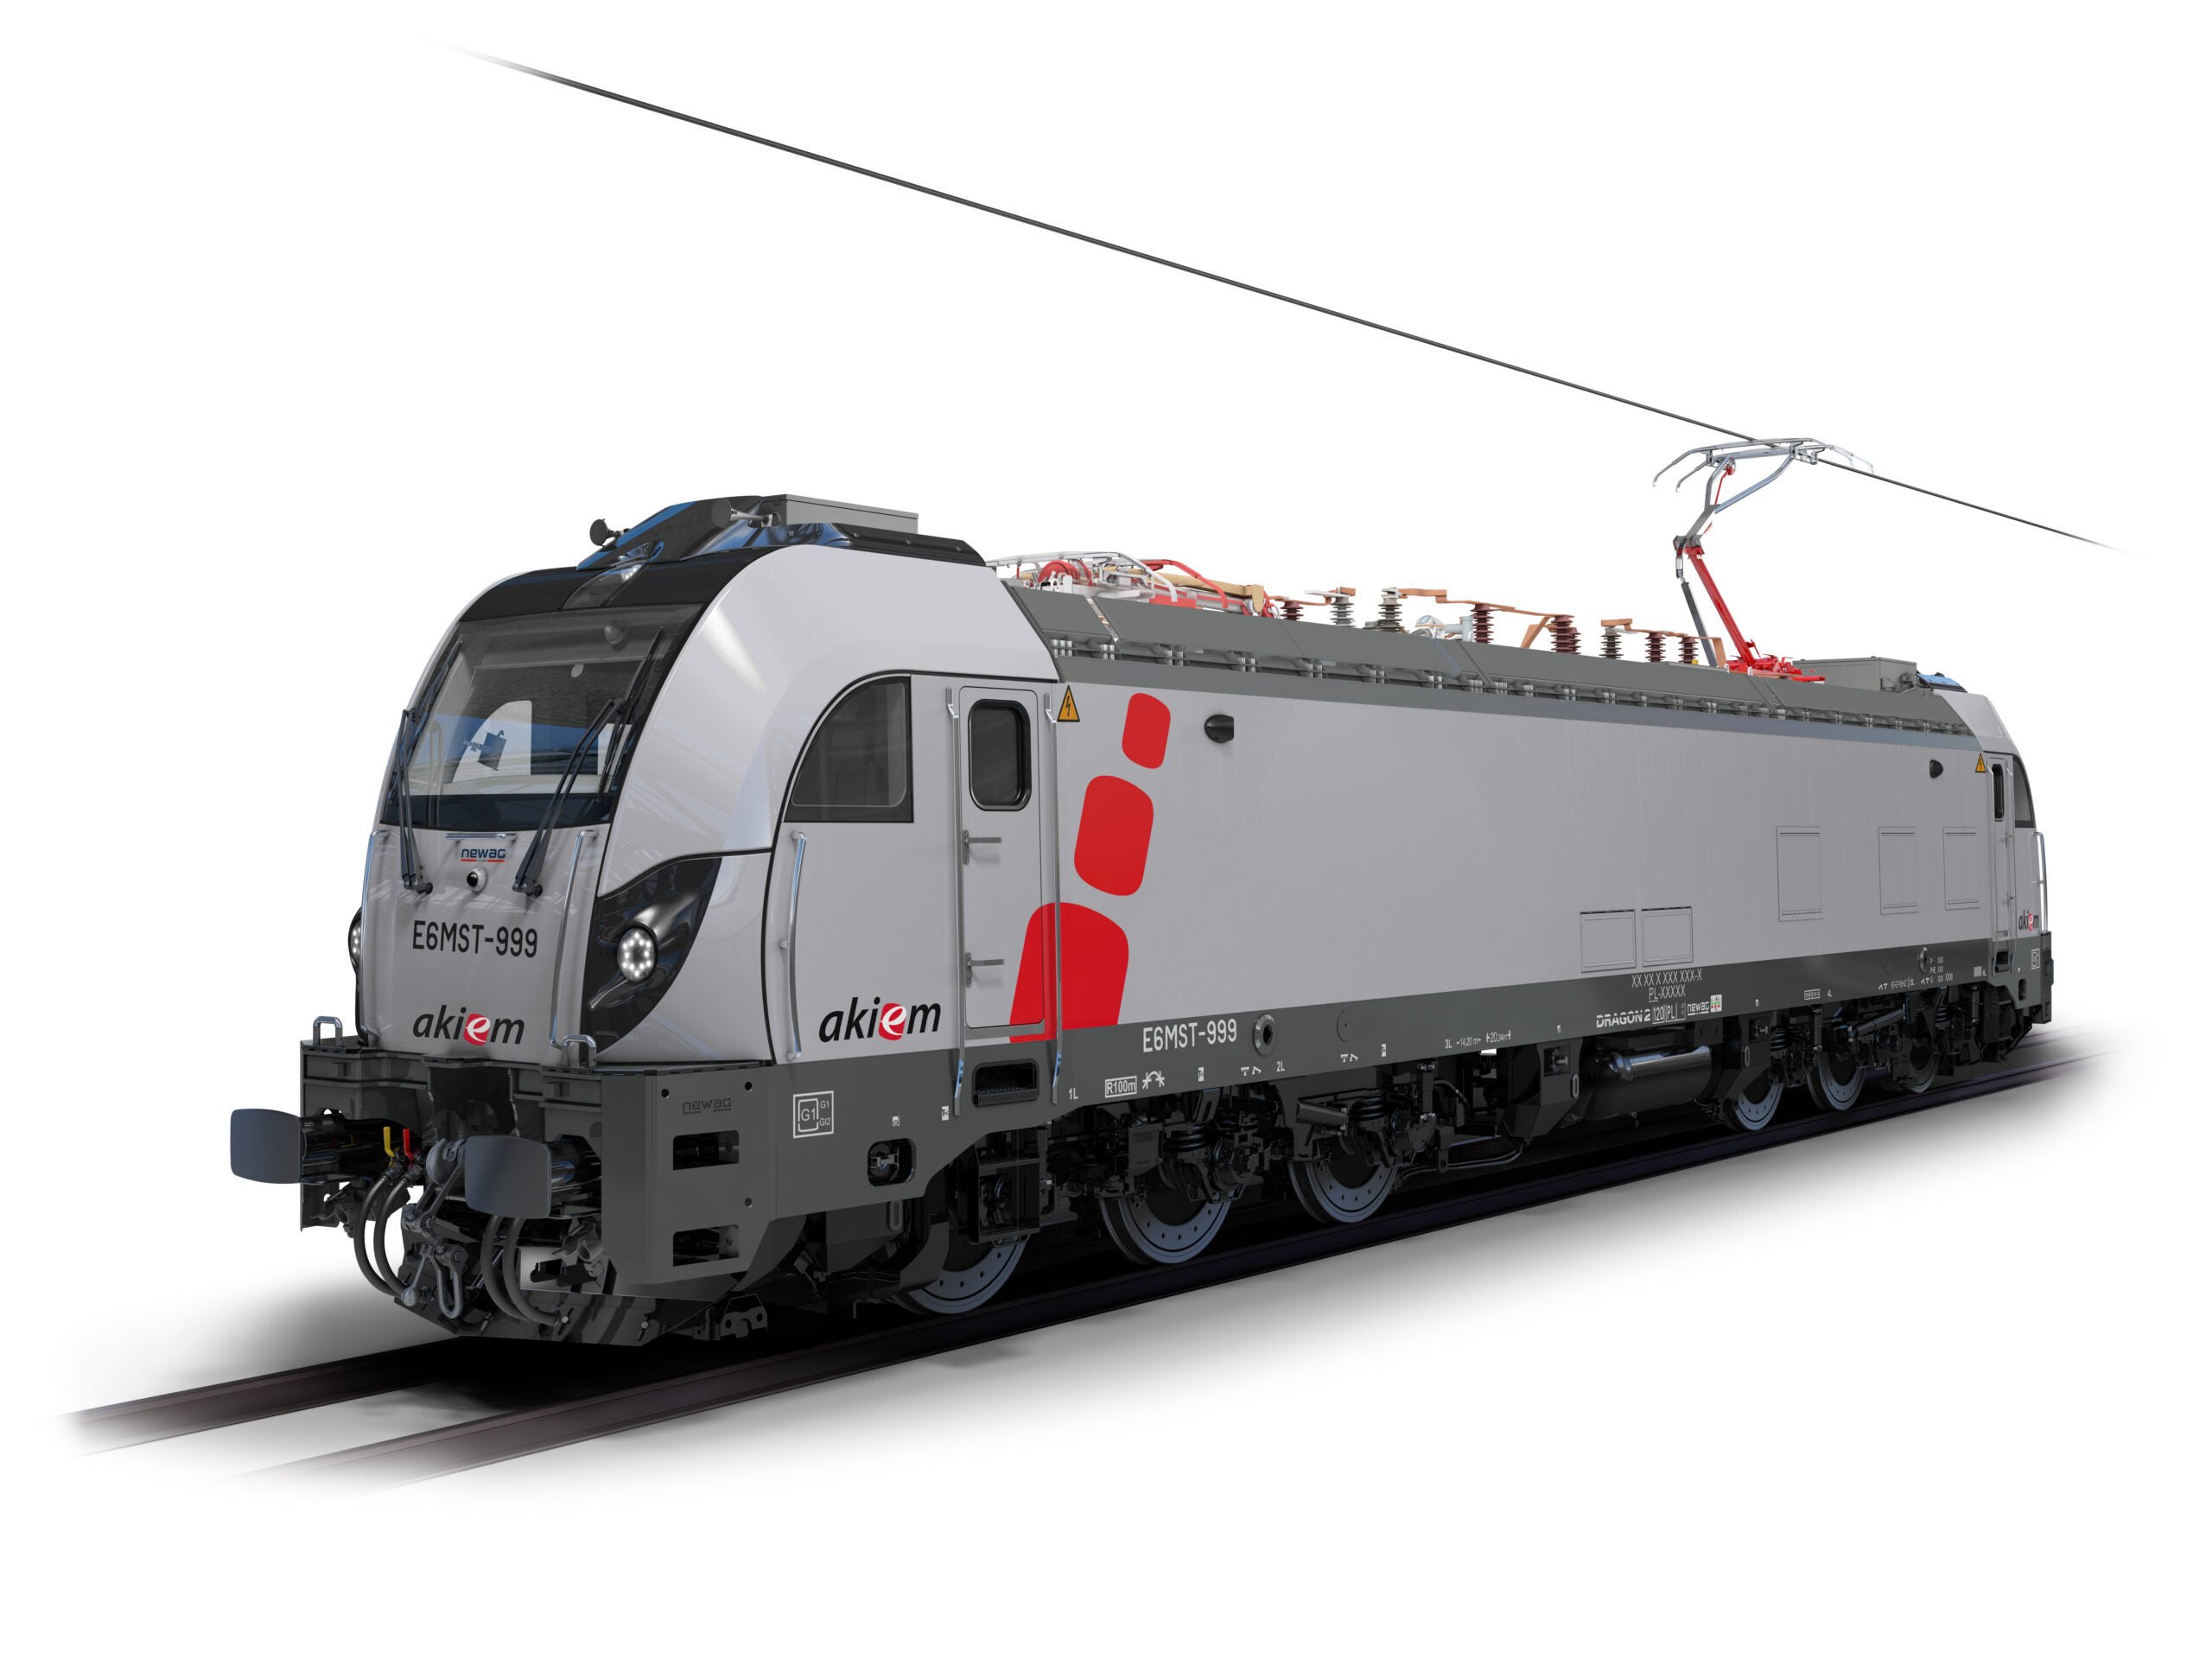 Dragon-2 electric locomotive by Newag